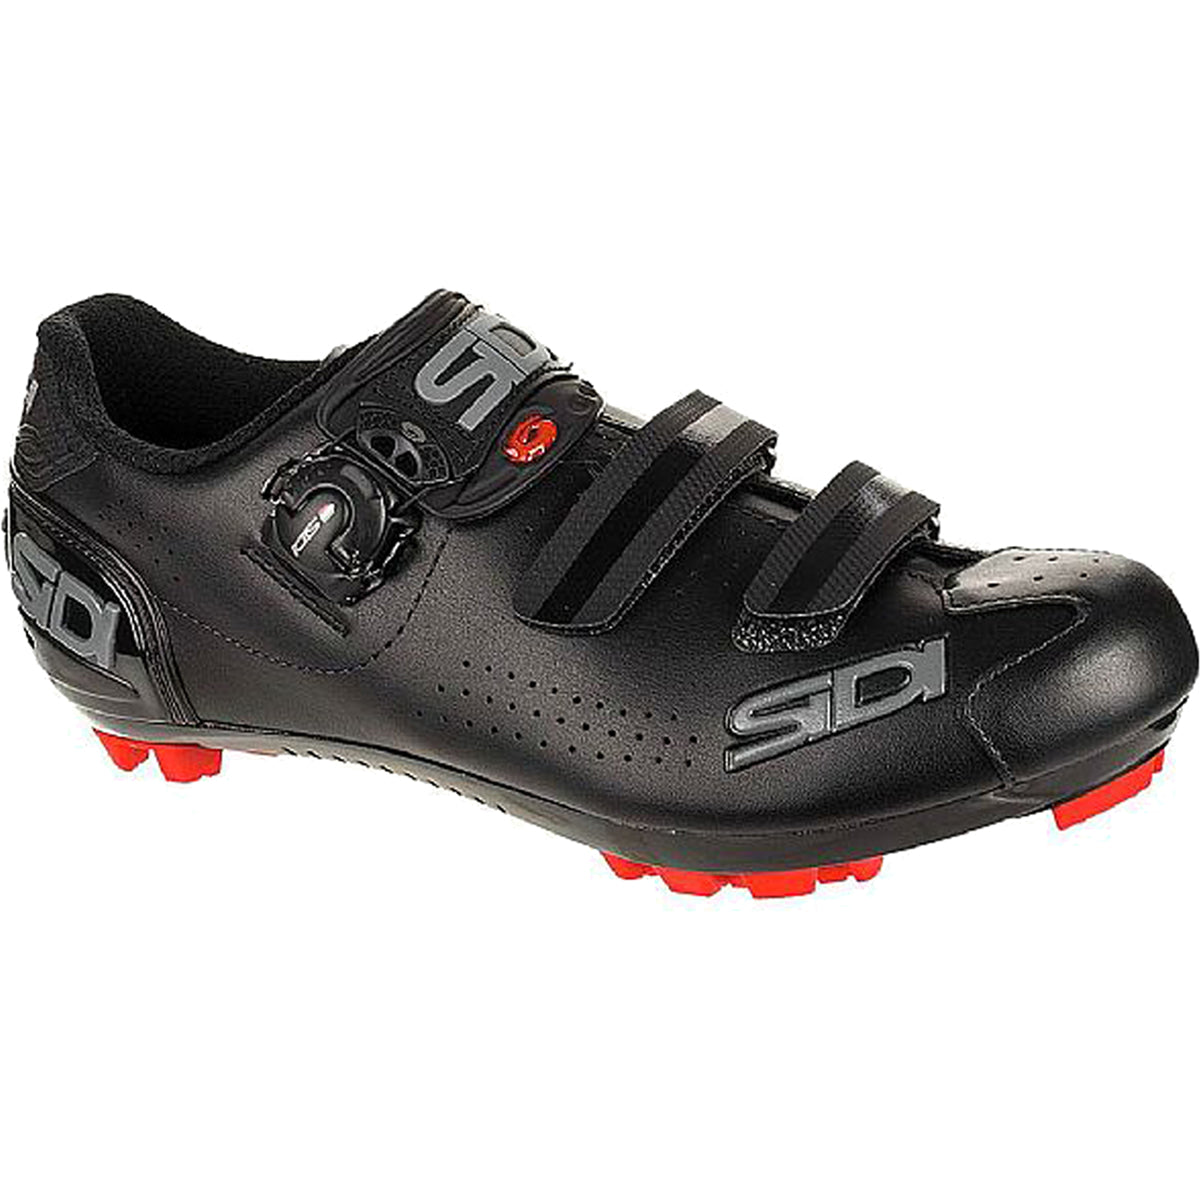 Sidi Trace 2 Mountain Bike Shoes - Black/Black